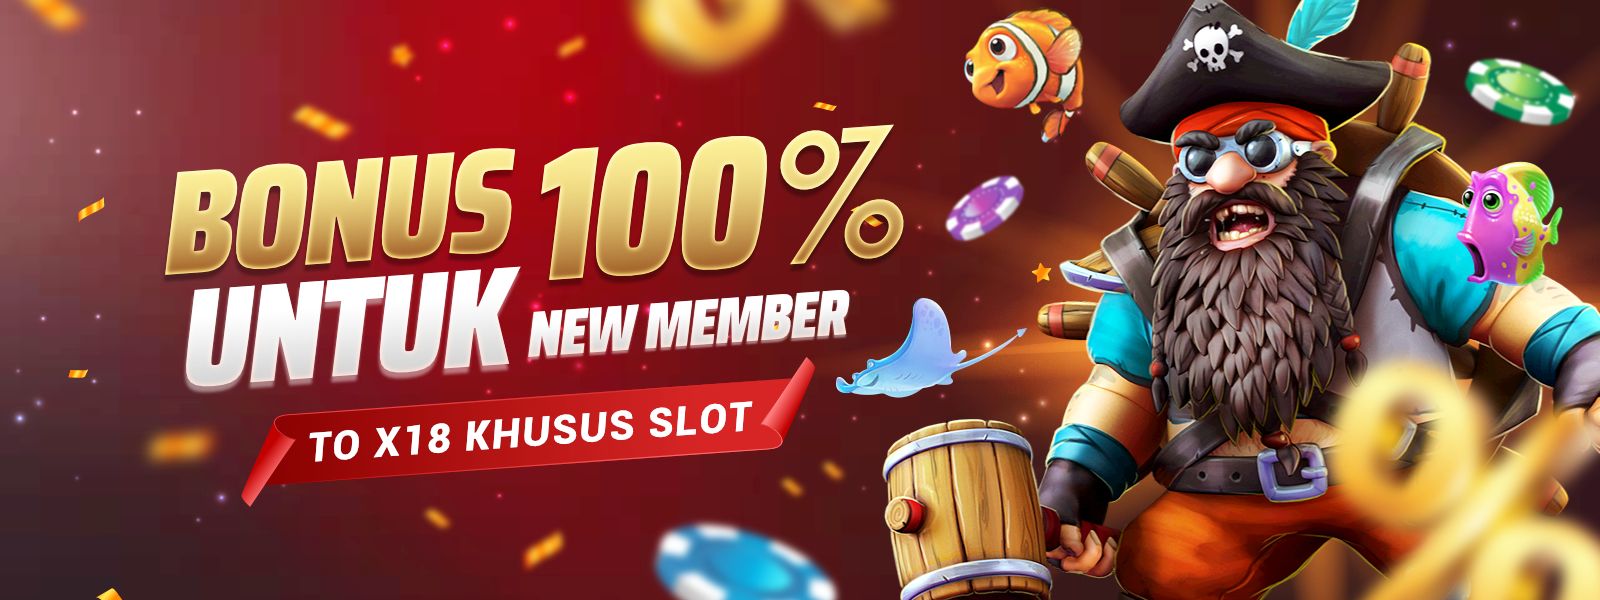 Bonus New Member 100%